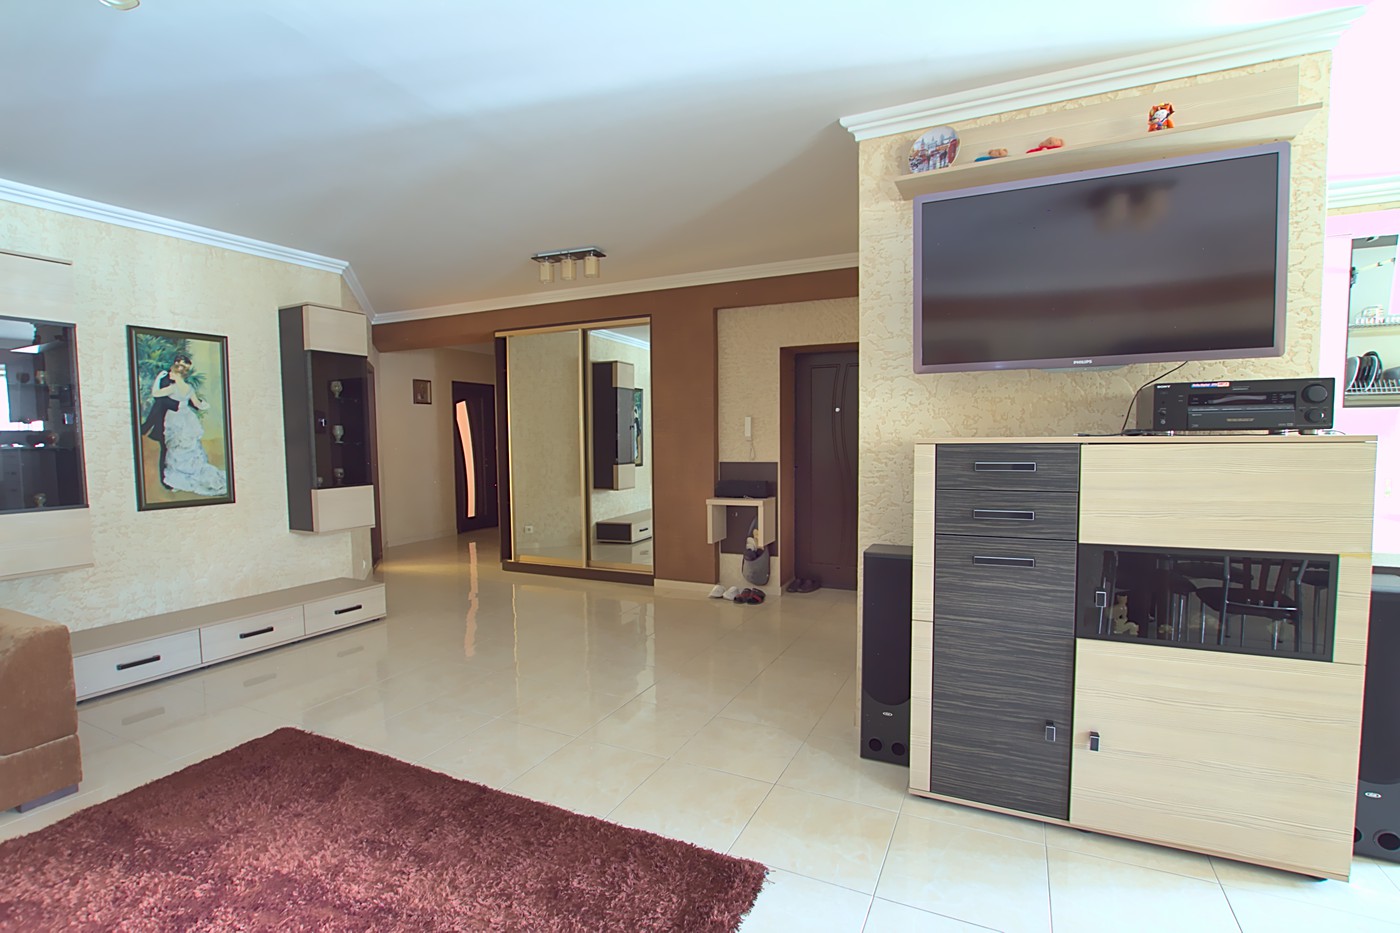 Deluxe Center Apartment это квартира в аренду в Кишиневе имеющая 3 комнаты в аренду в Кишиневе - Chisinau, Moldova